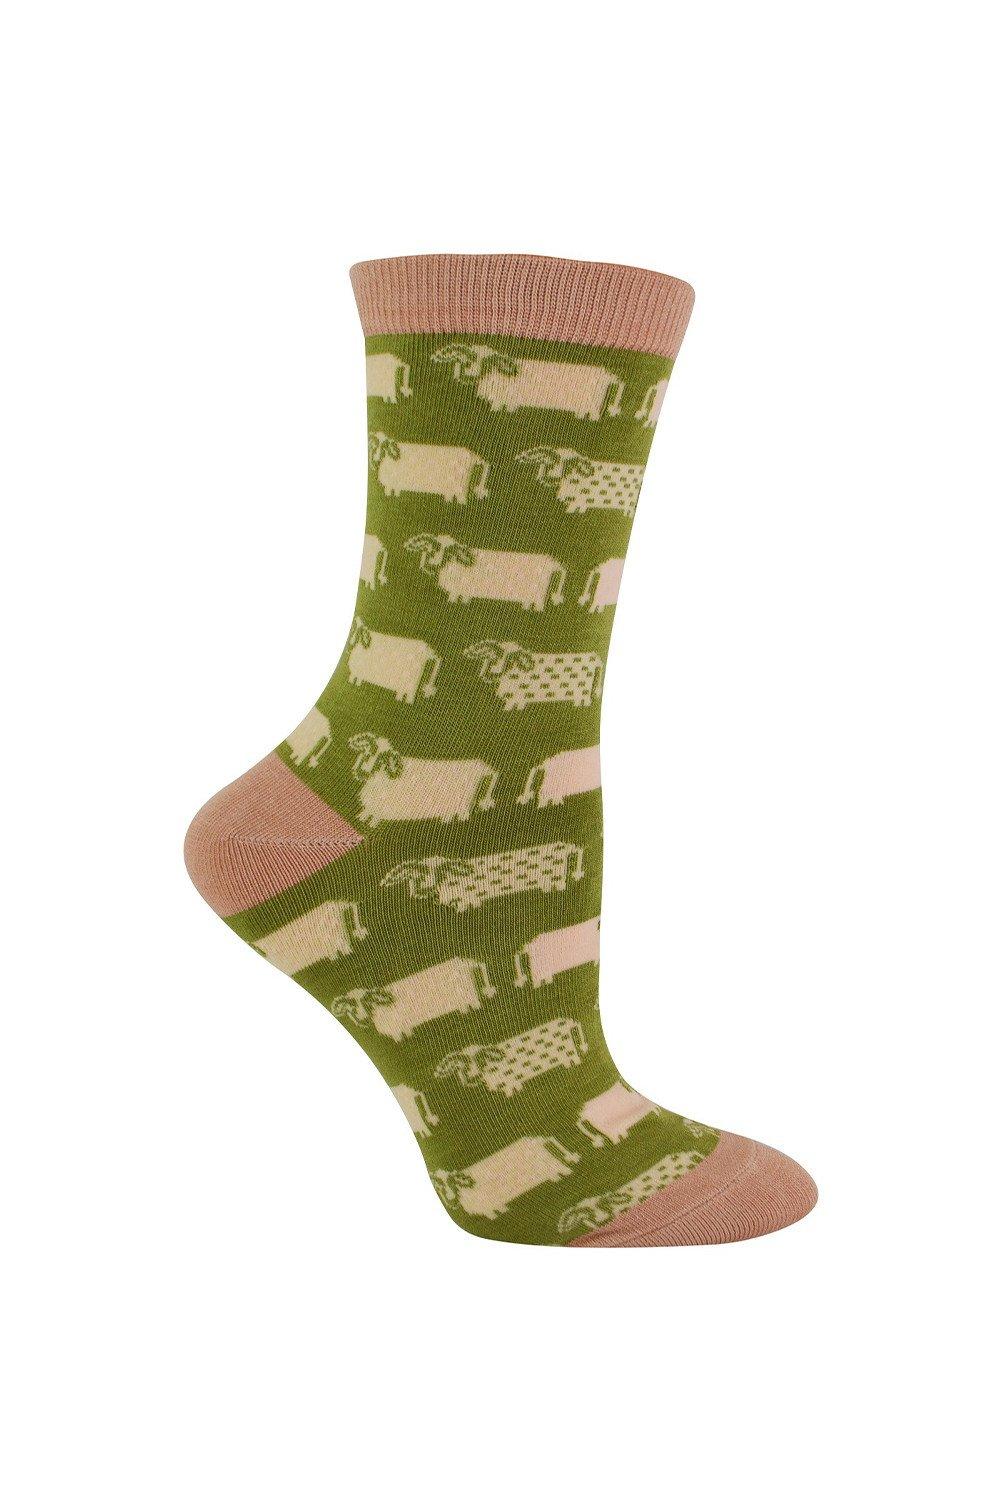 Novelty Animal Themed Soft Breathable Bamboo Socks